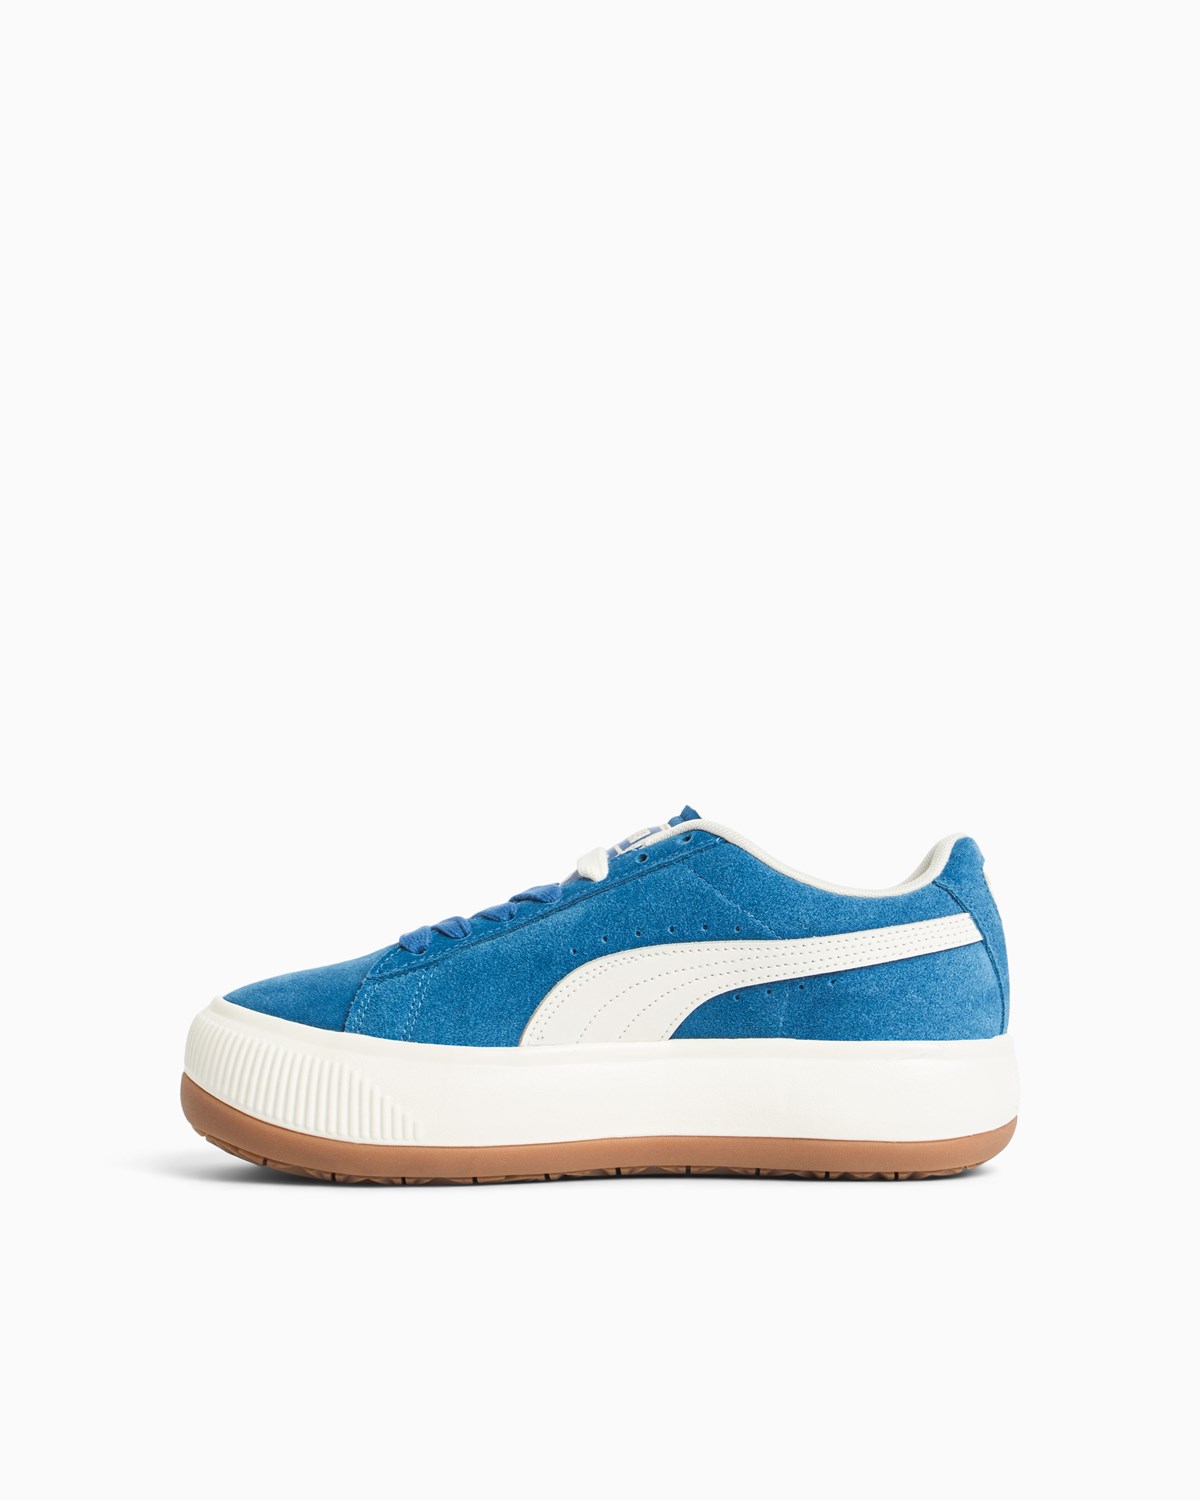 Suede Mayu Up W Puma Footwear Sneakers Blue